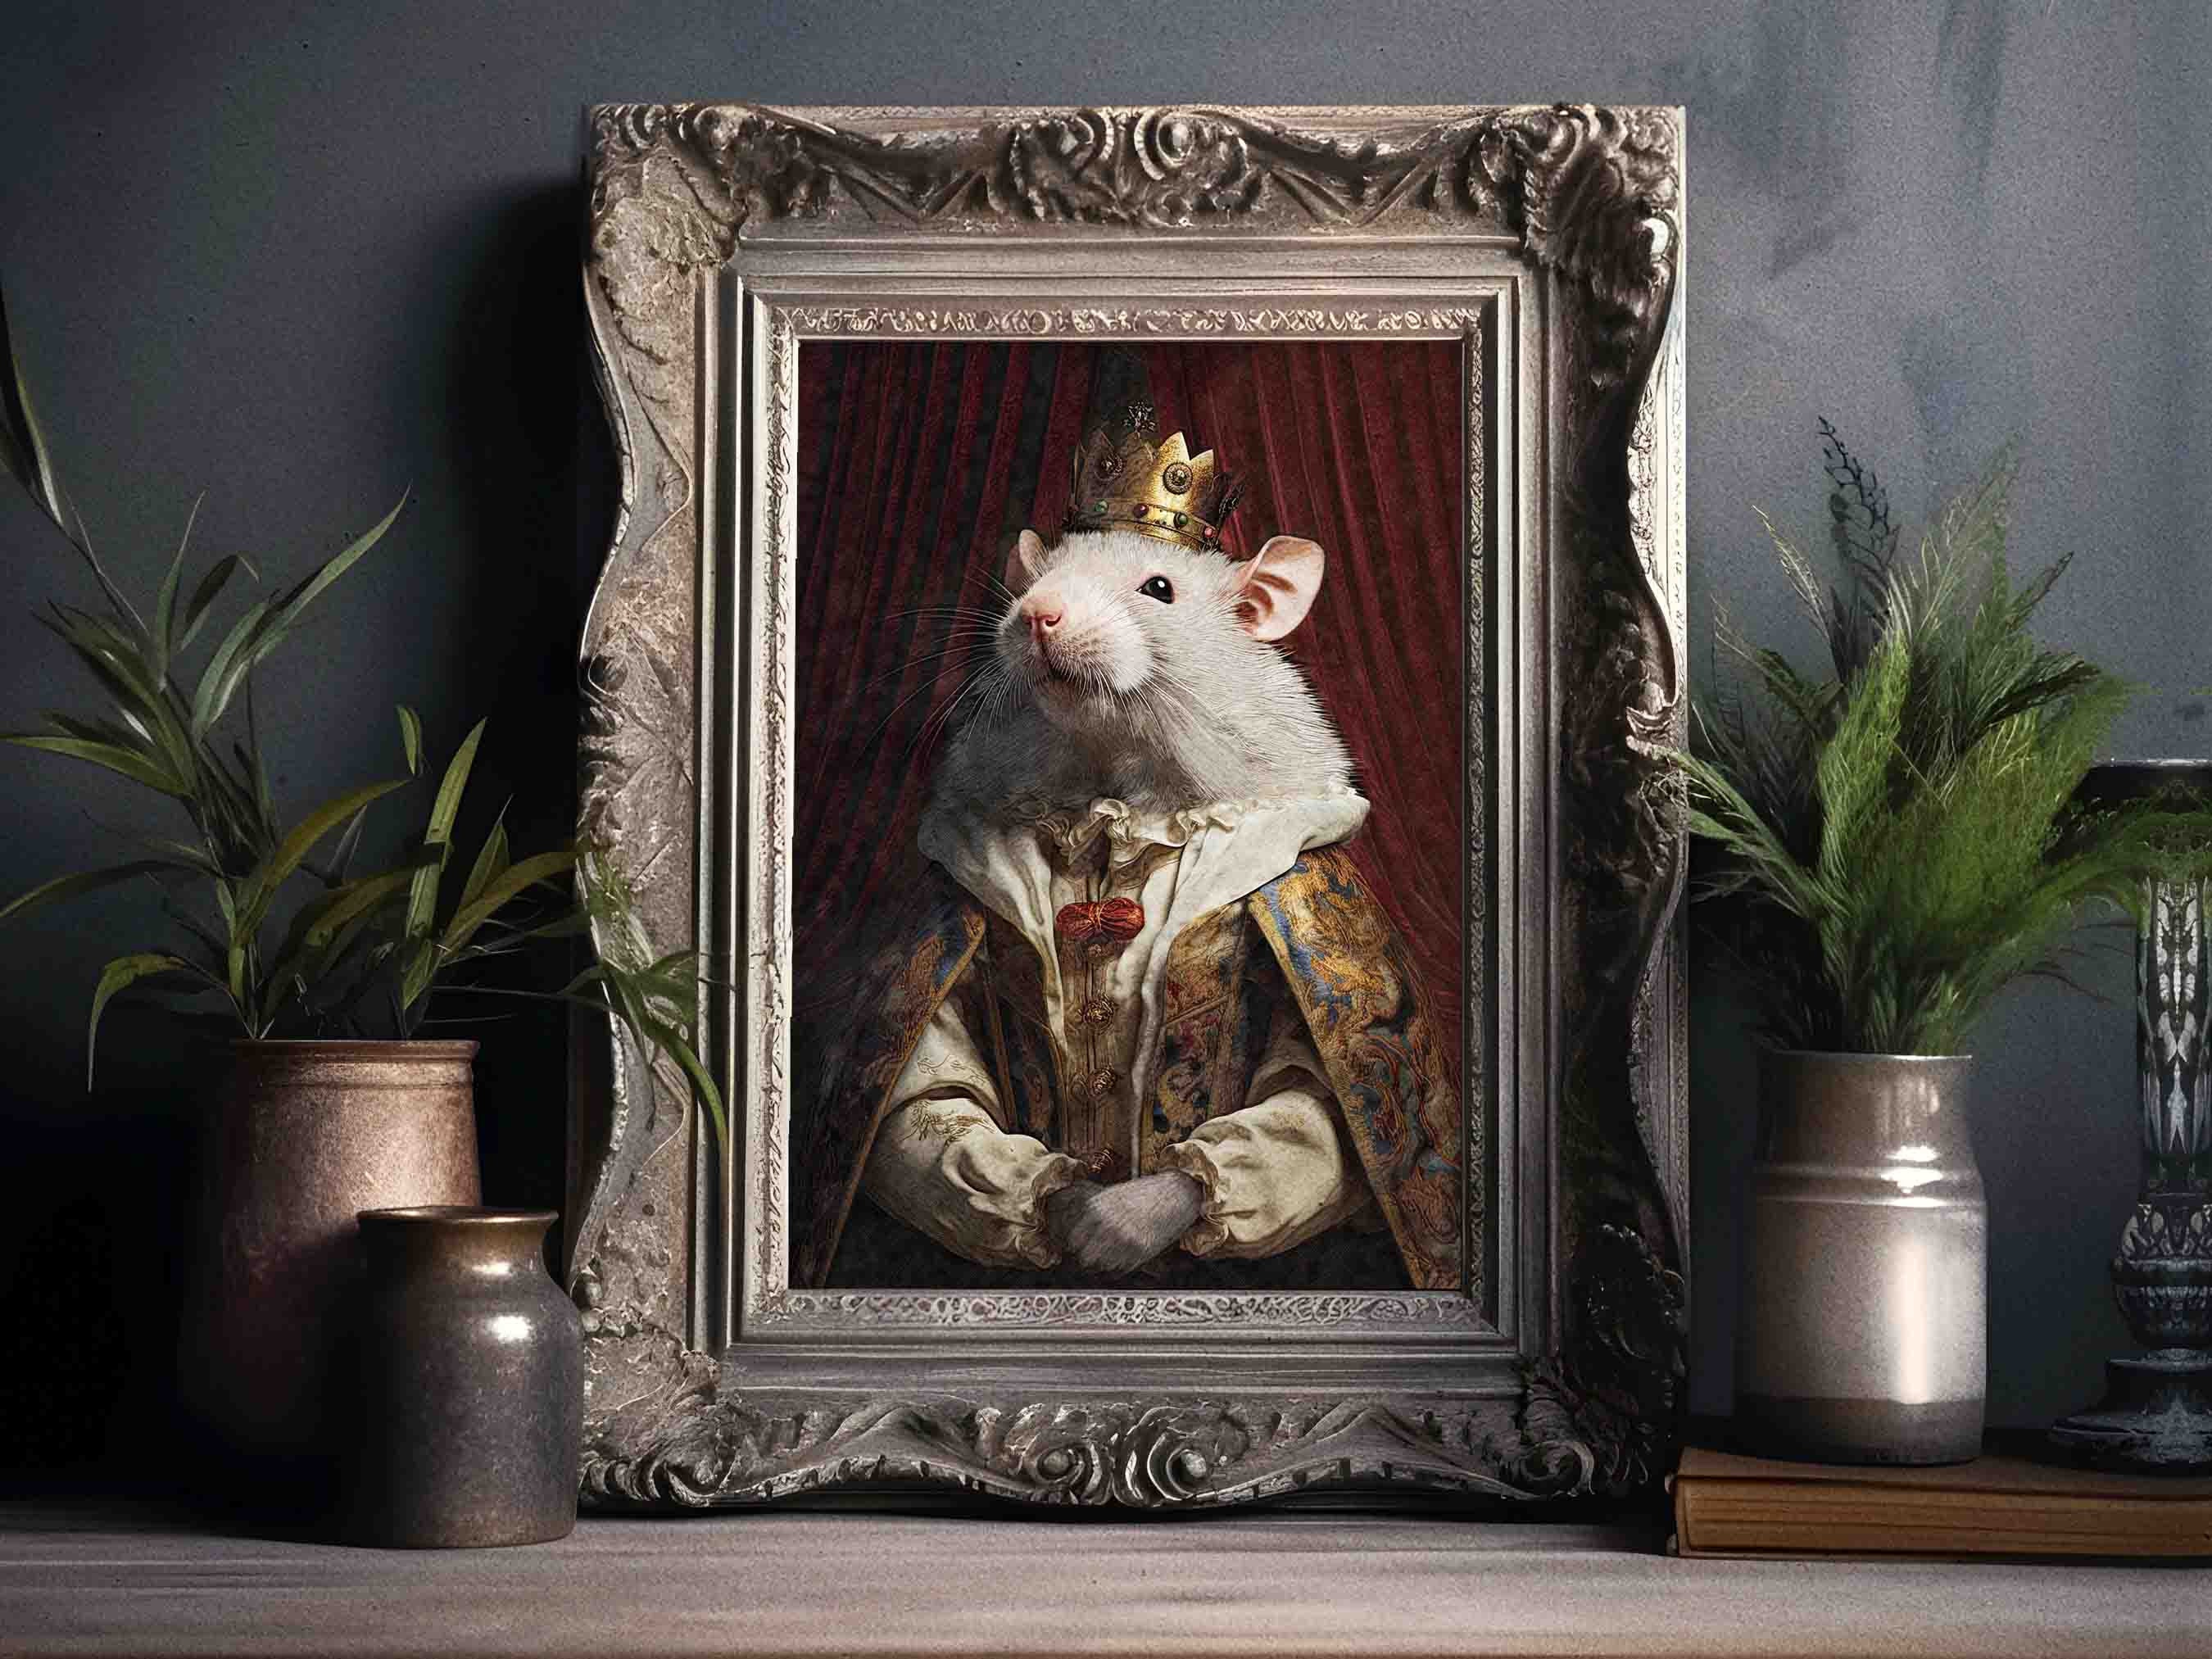 Rat King — Stockroom Kyneton Gallery Victoria